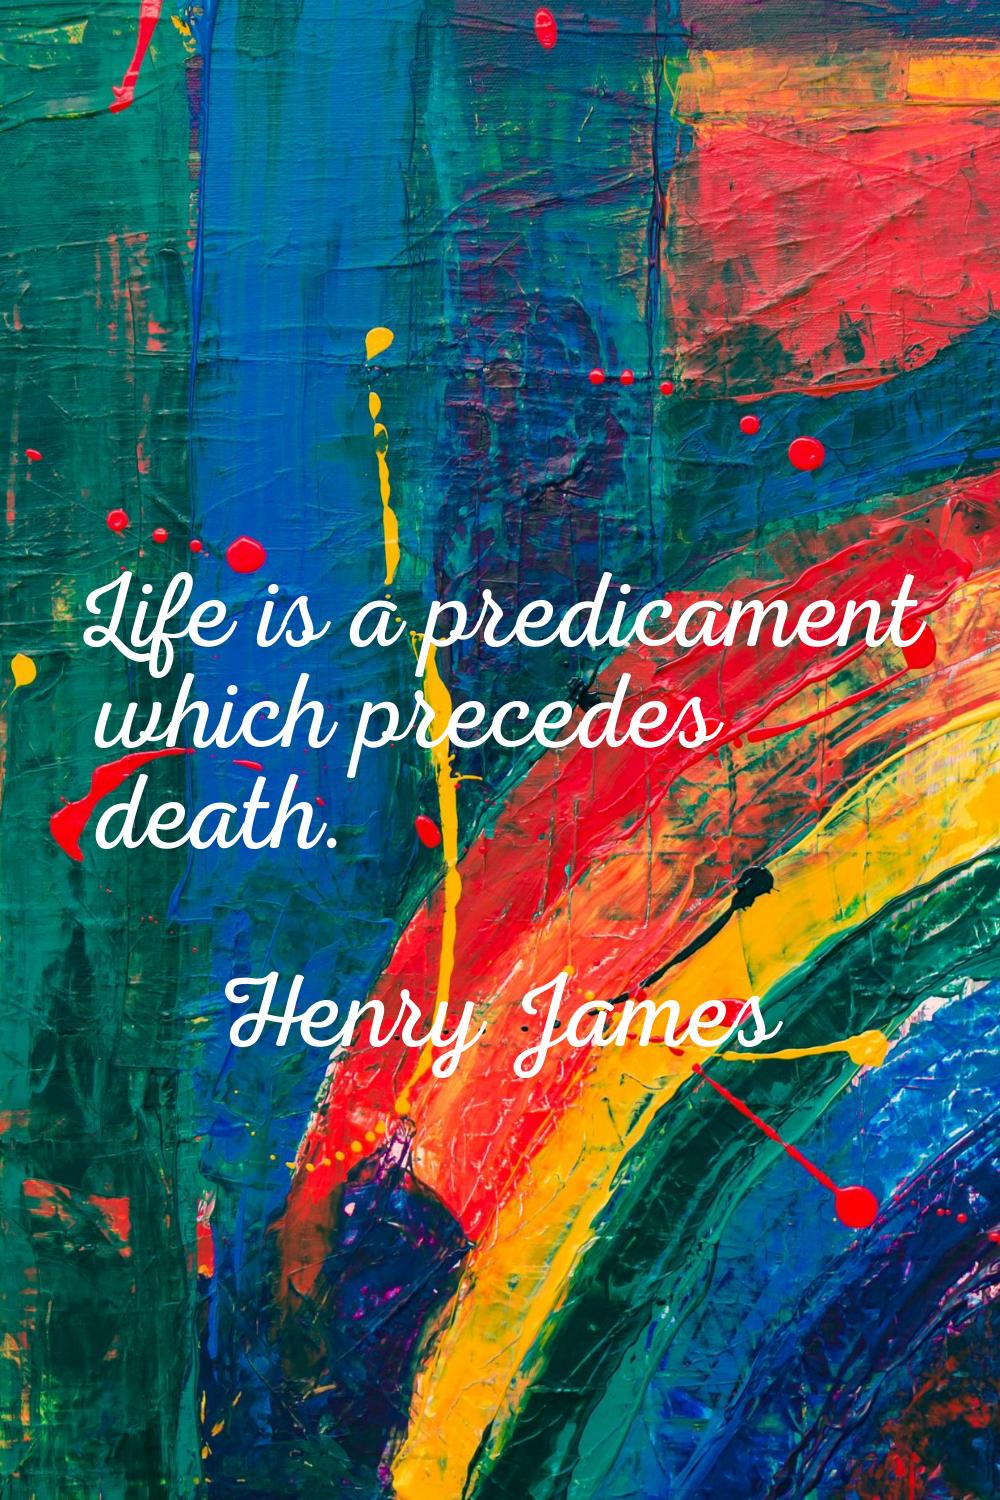 Life is a predicament which precedes death.